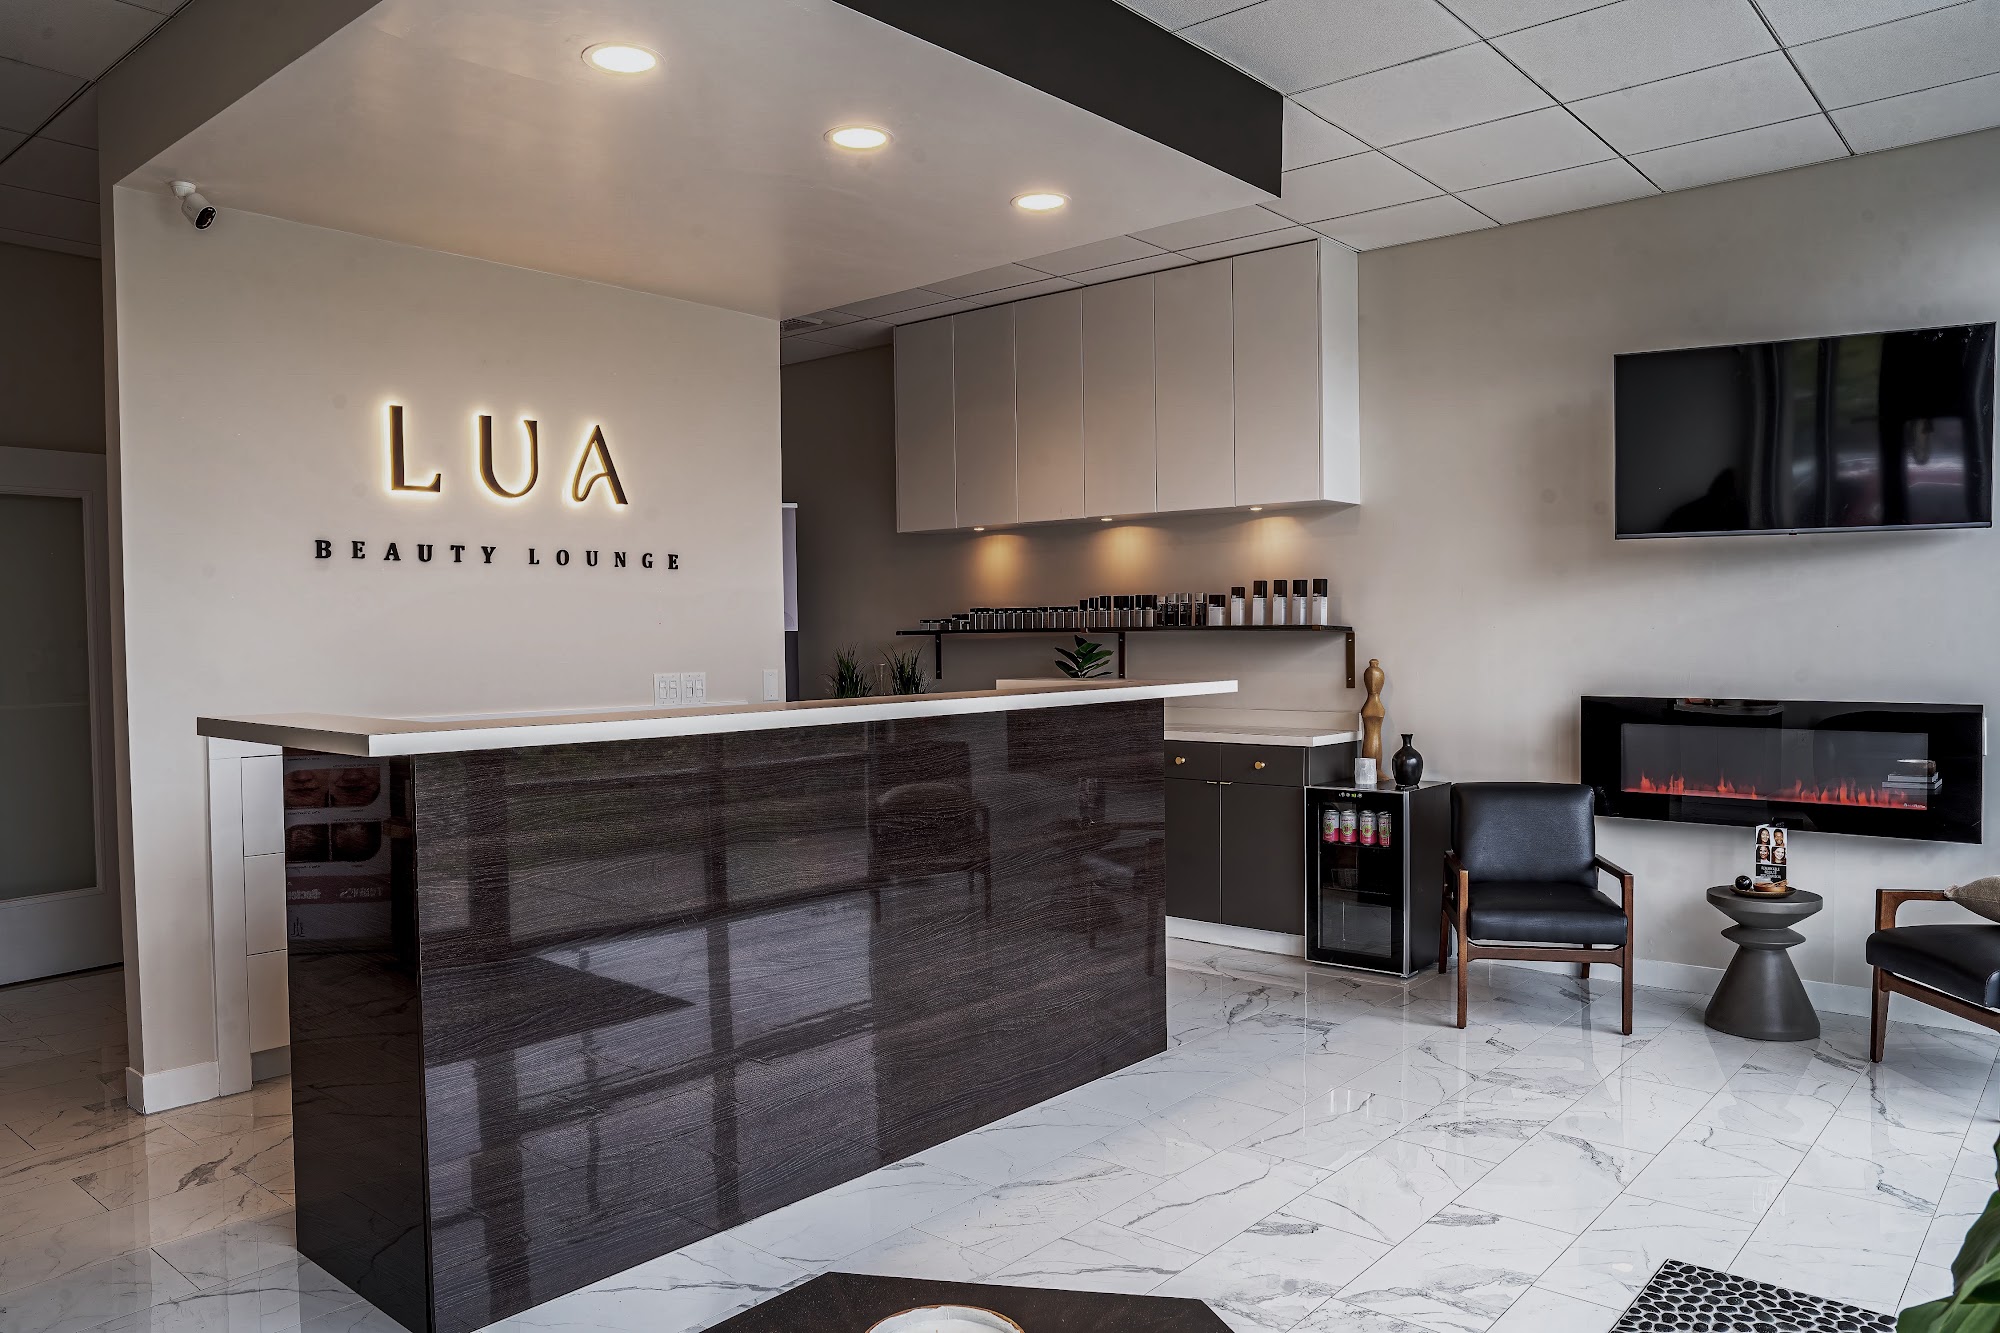 Lua Beauty Lounge